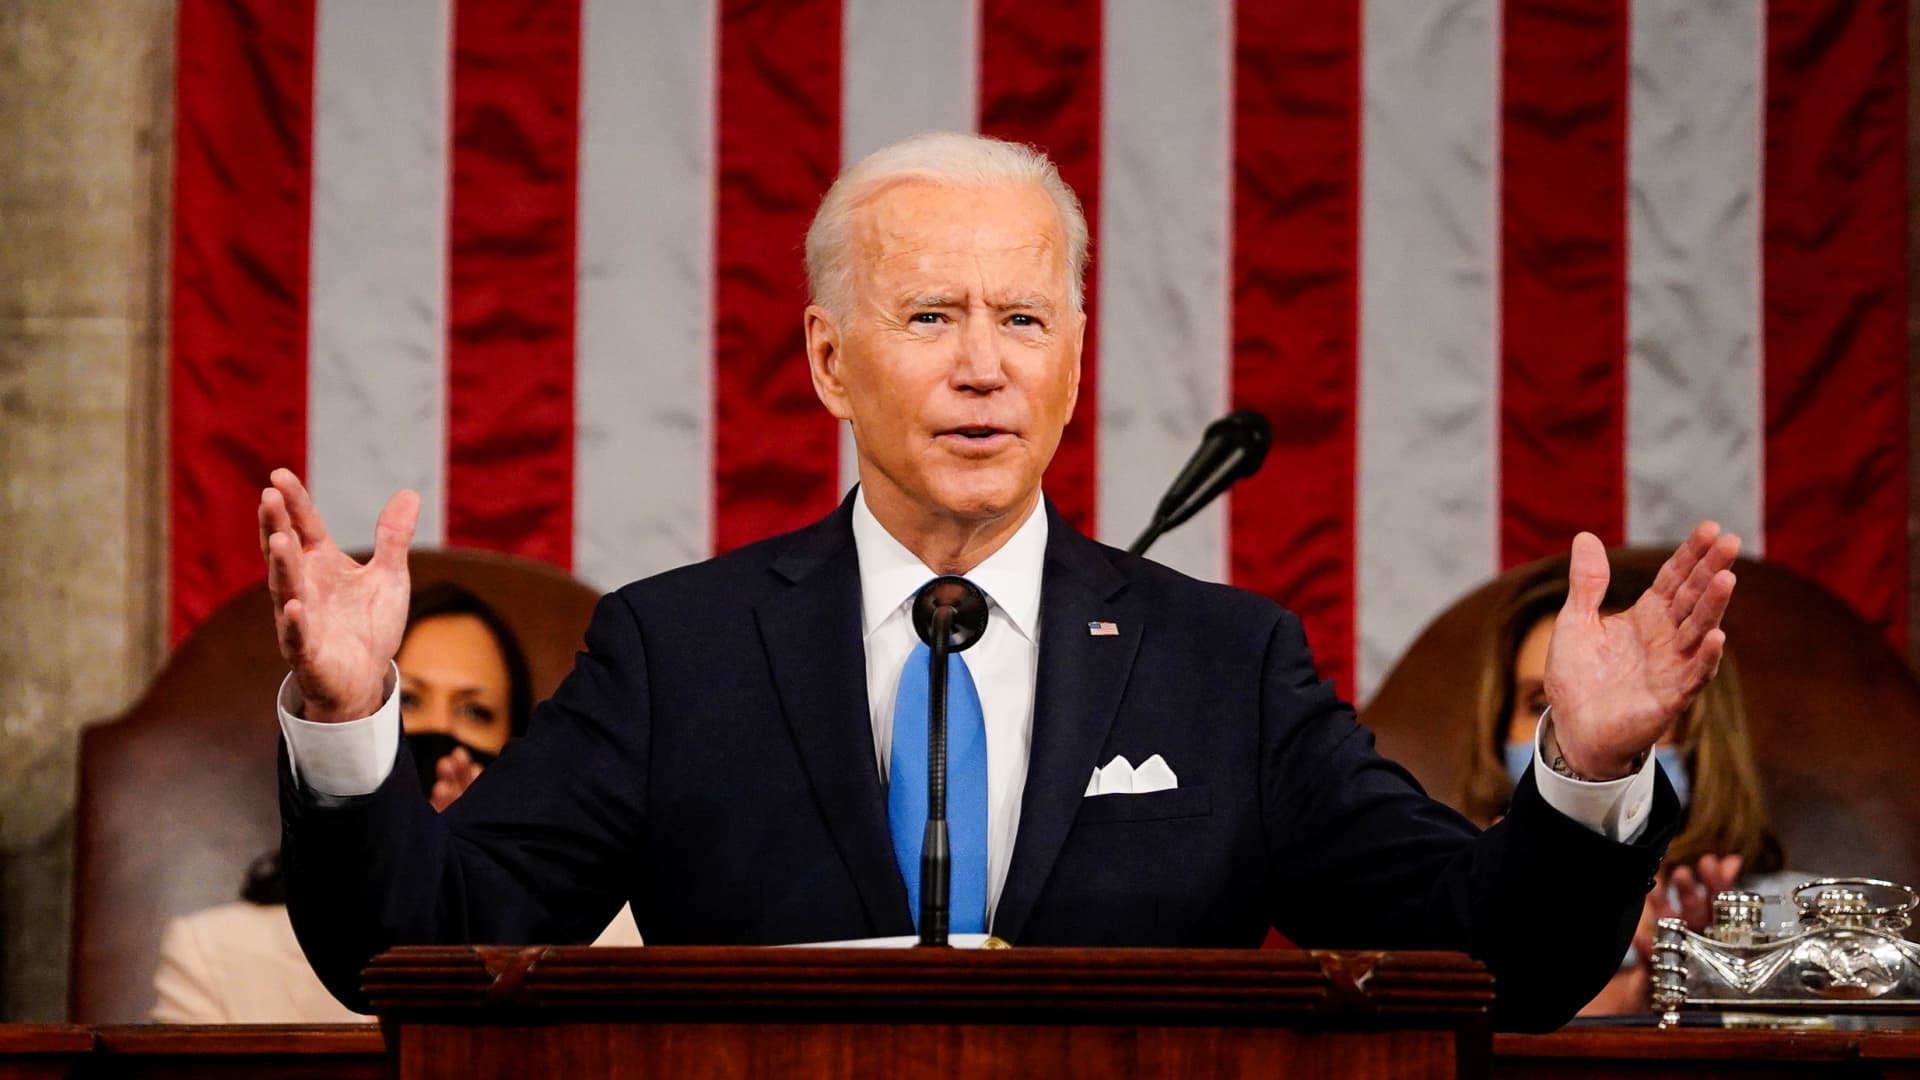 President Joe Biden addresses a joint session of Congress at the U.S. Capitol in Washington, DC, U.S. April 28, 2021.